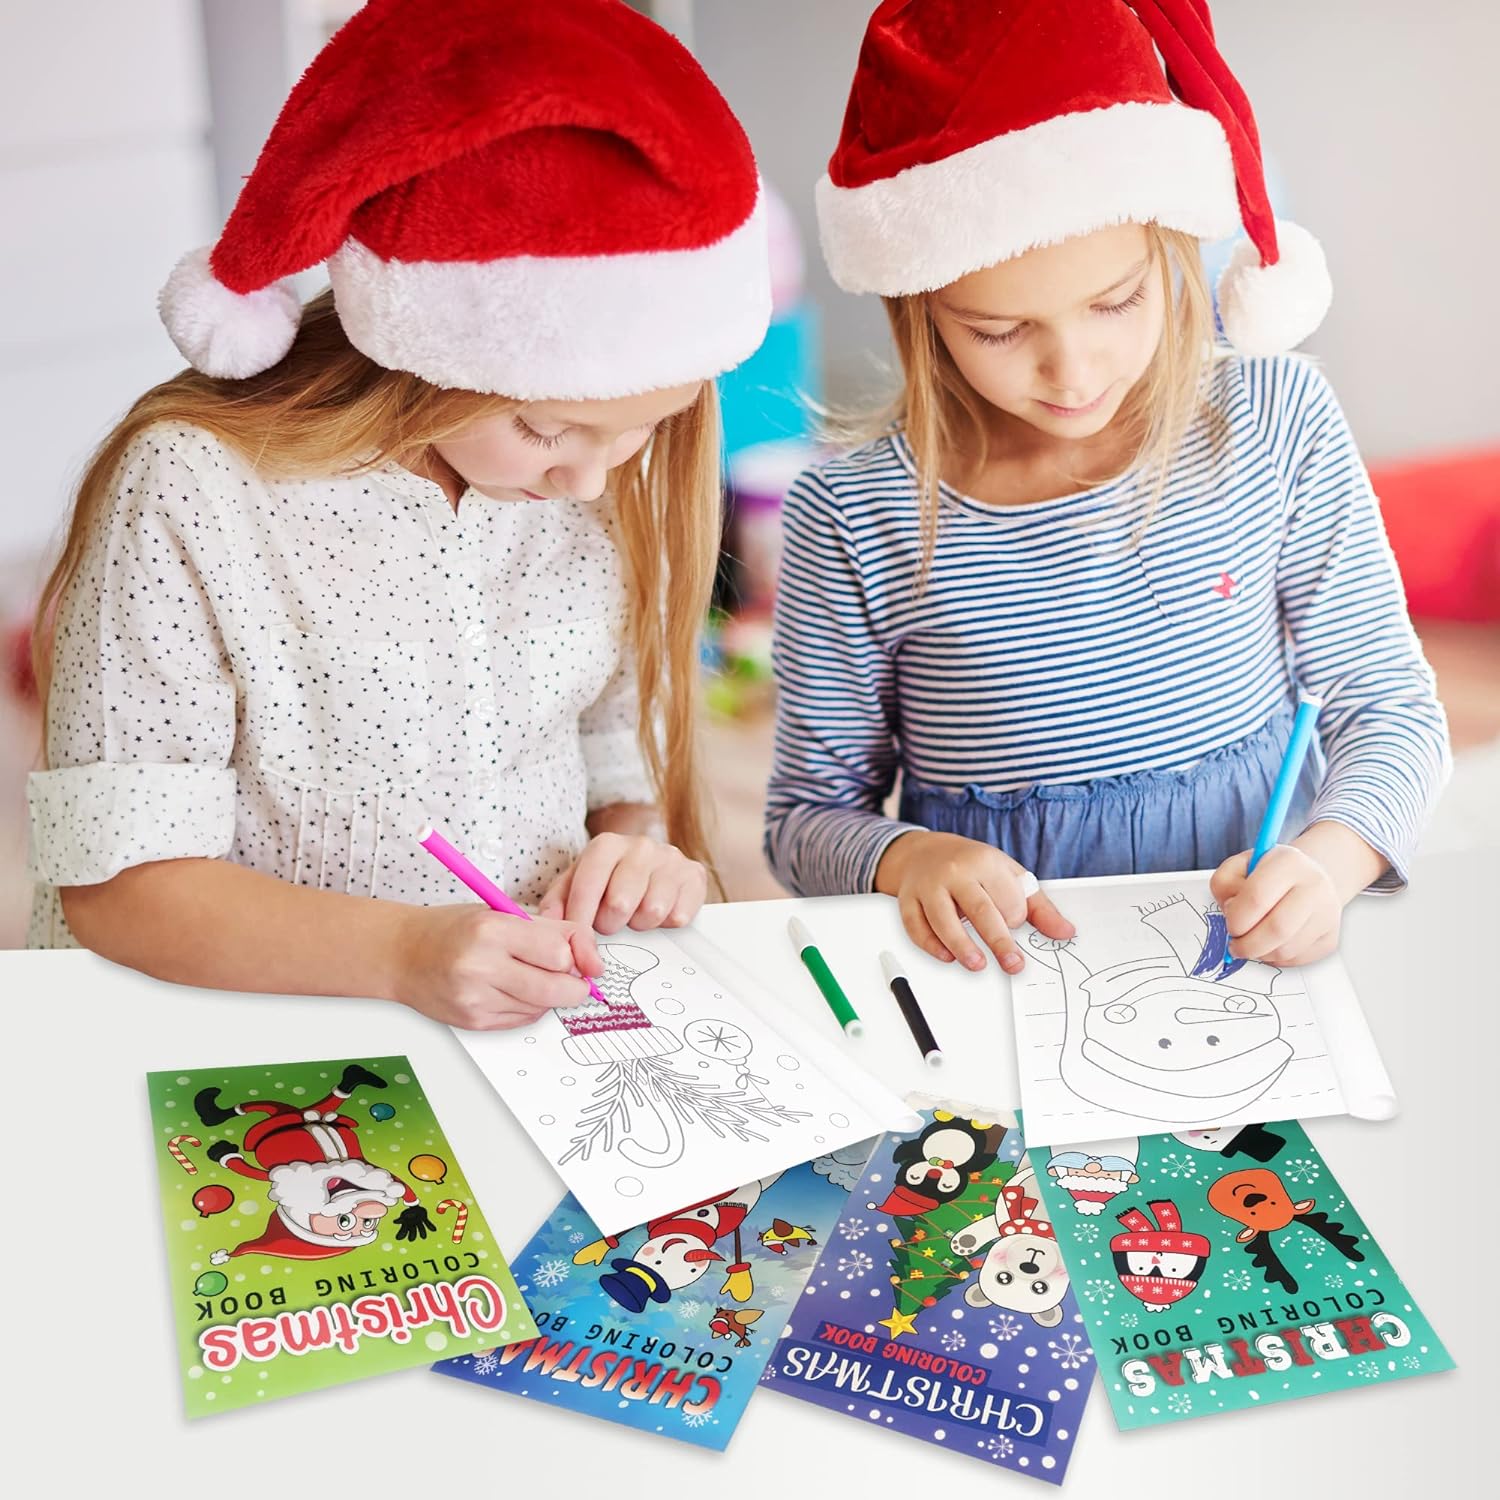 Christmas Coloring Books for Kids Bulk, Pack of 20, 5” x 7” Christmas Coloring Book, Christmas Party Favors for Kids, Favor Bag Fillers, Party Supplies, Christmas Stocking Stuffers